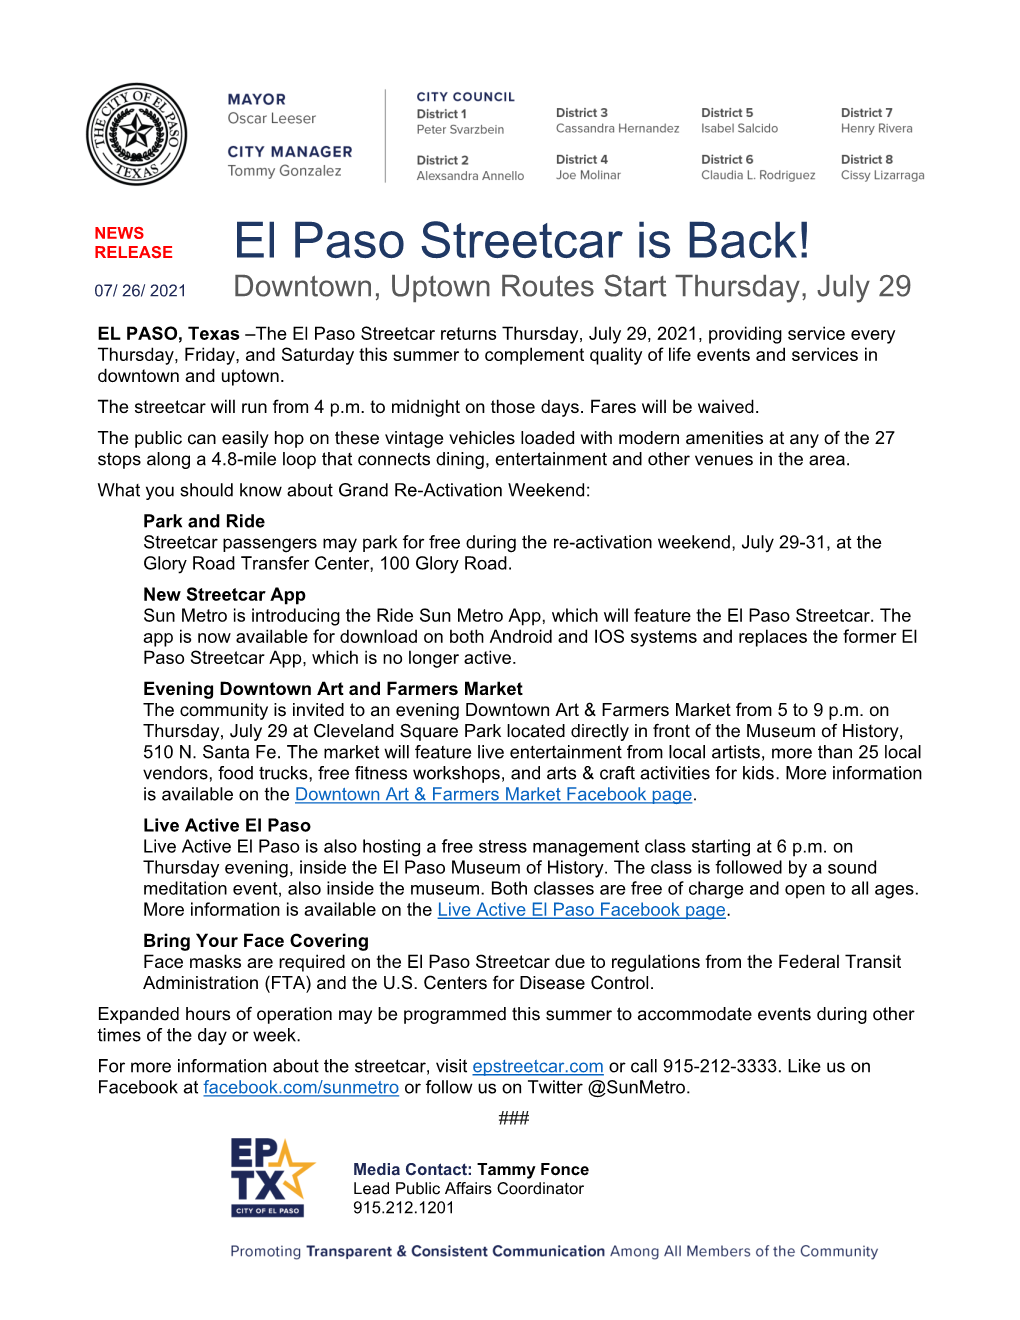 2021.07.26 NEWS RELEASE El Paso Streetcar Is Back